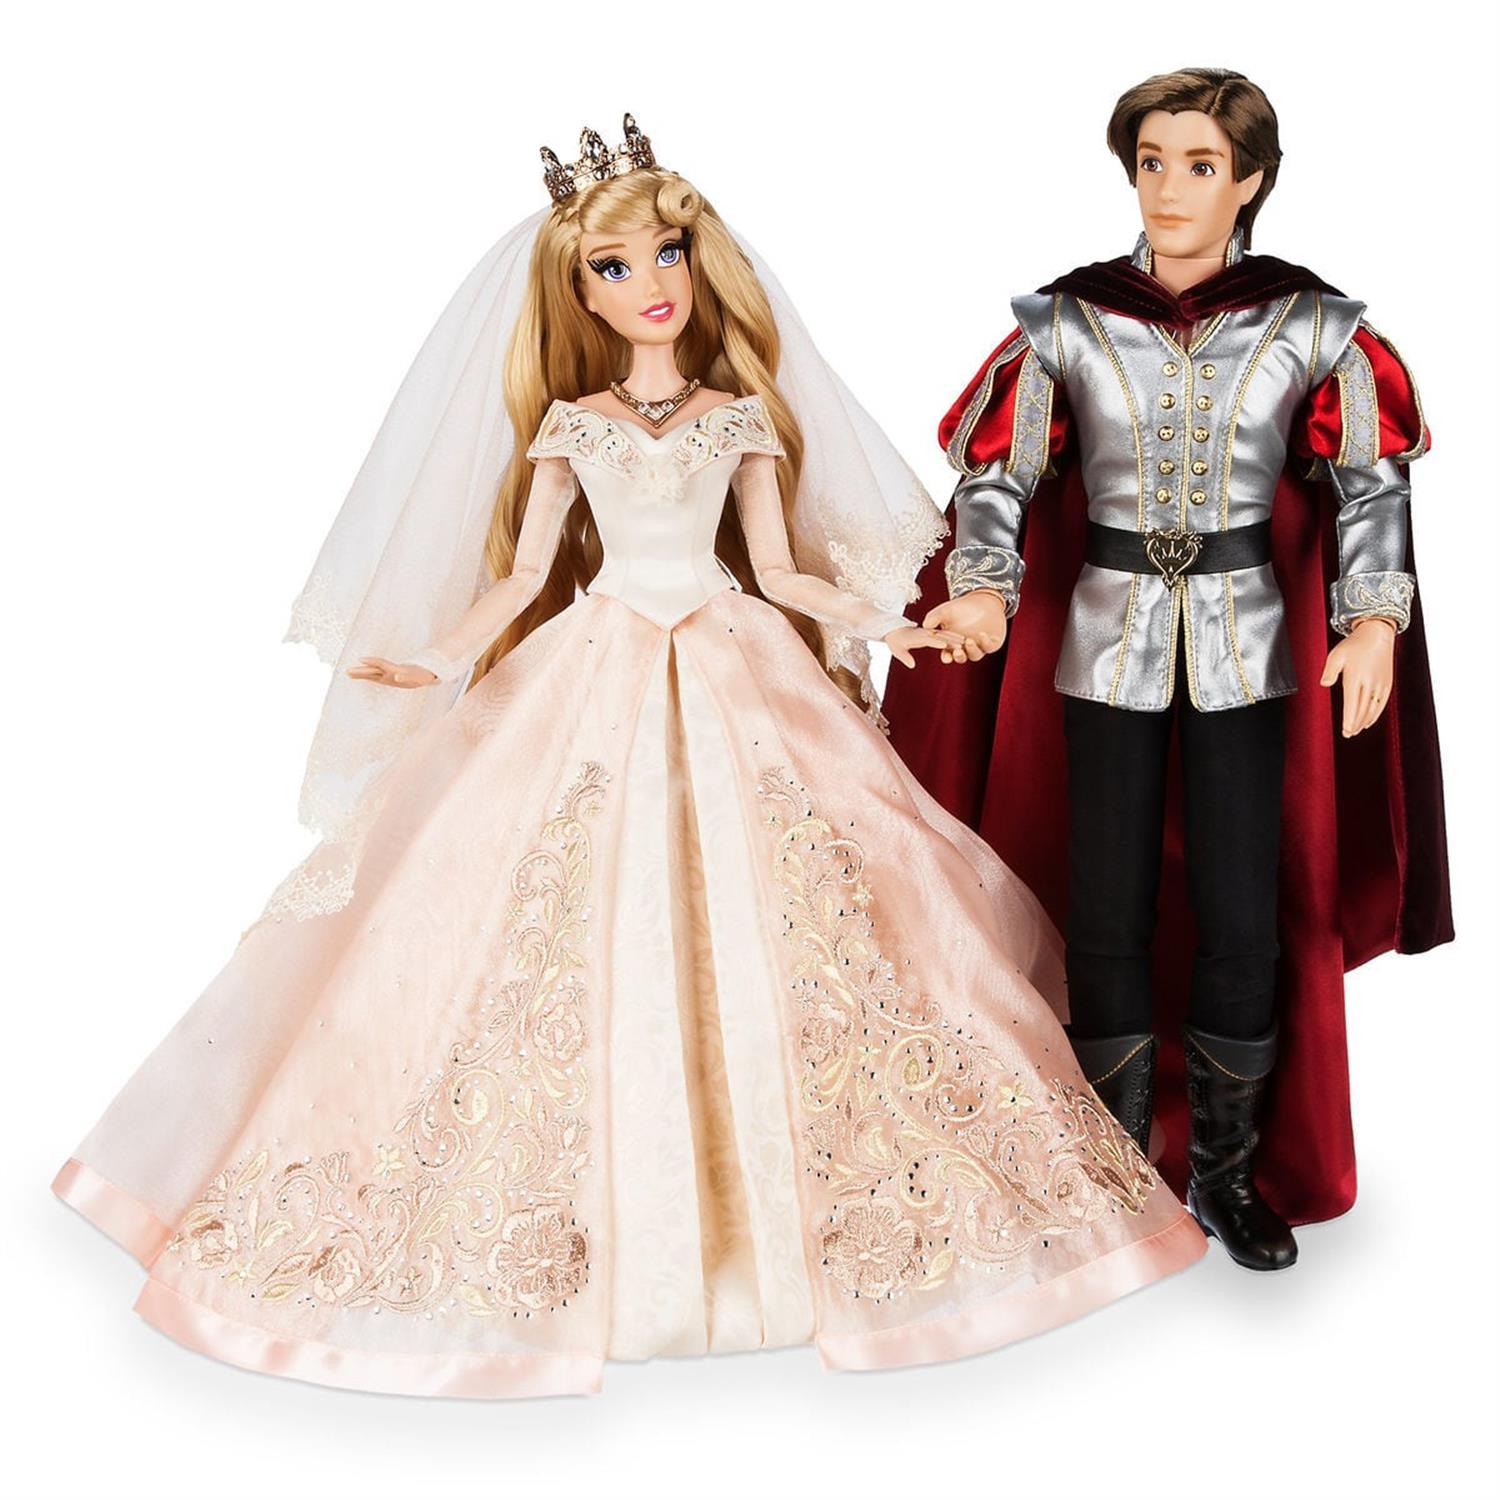 Aurora and Prince Philip Wedding Doll Set Arrives shopDisney